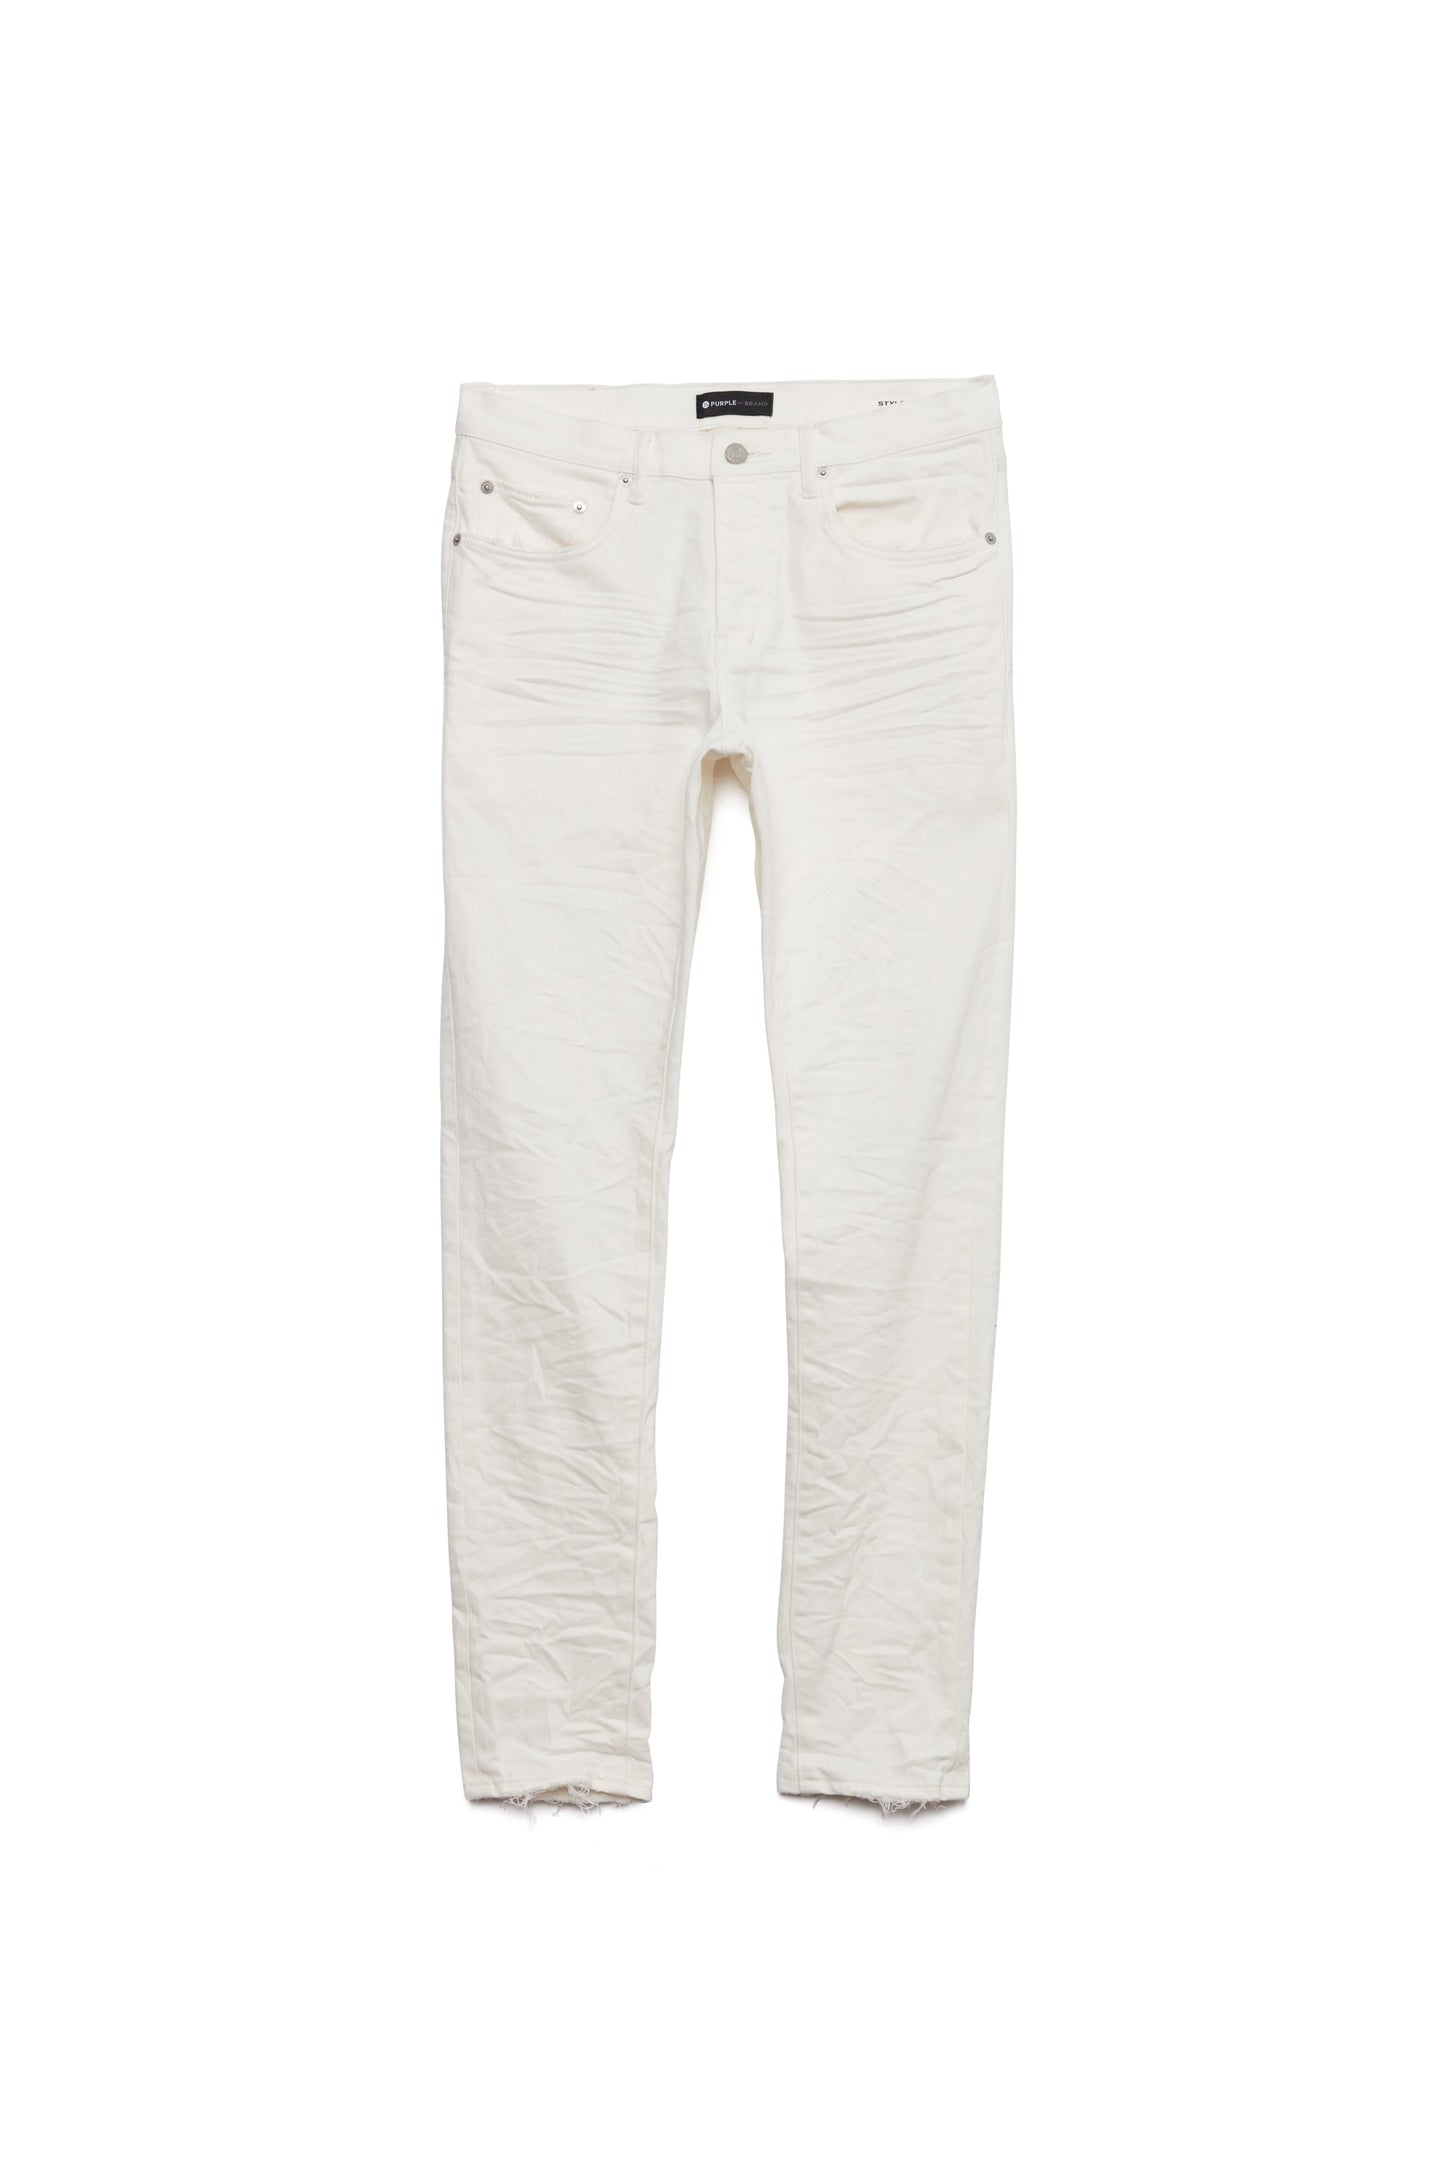 PURPLE BRAND - Men's Denim Jean - Low Rise Skinny - Style No. P001 -  Optic White - Front